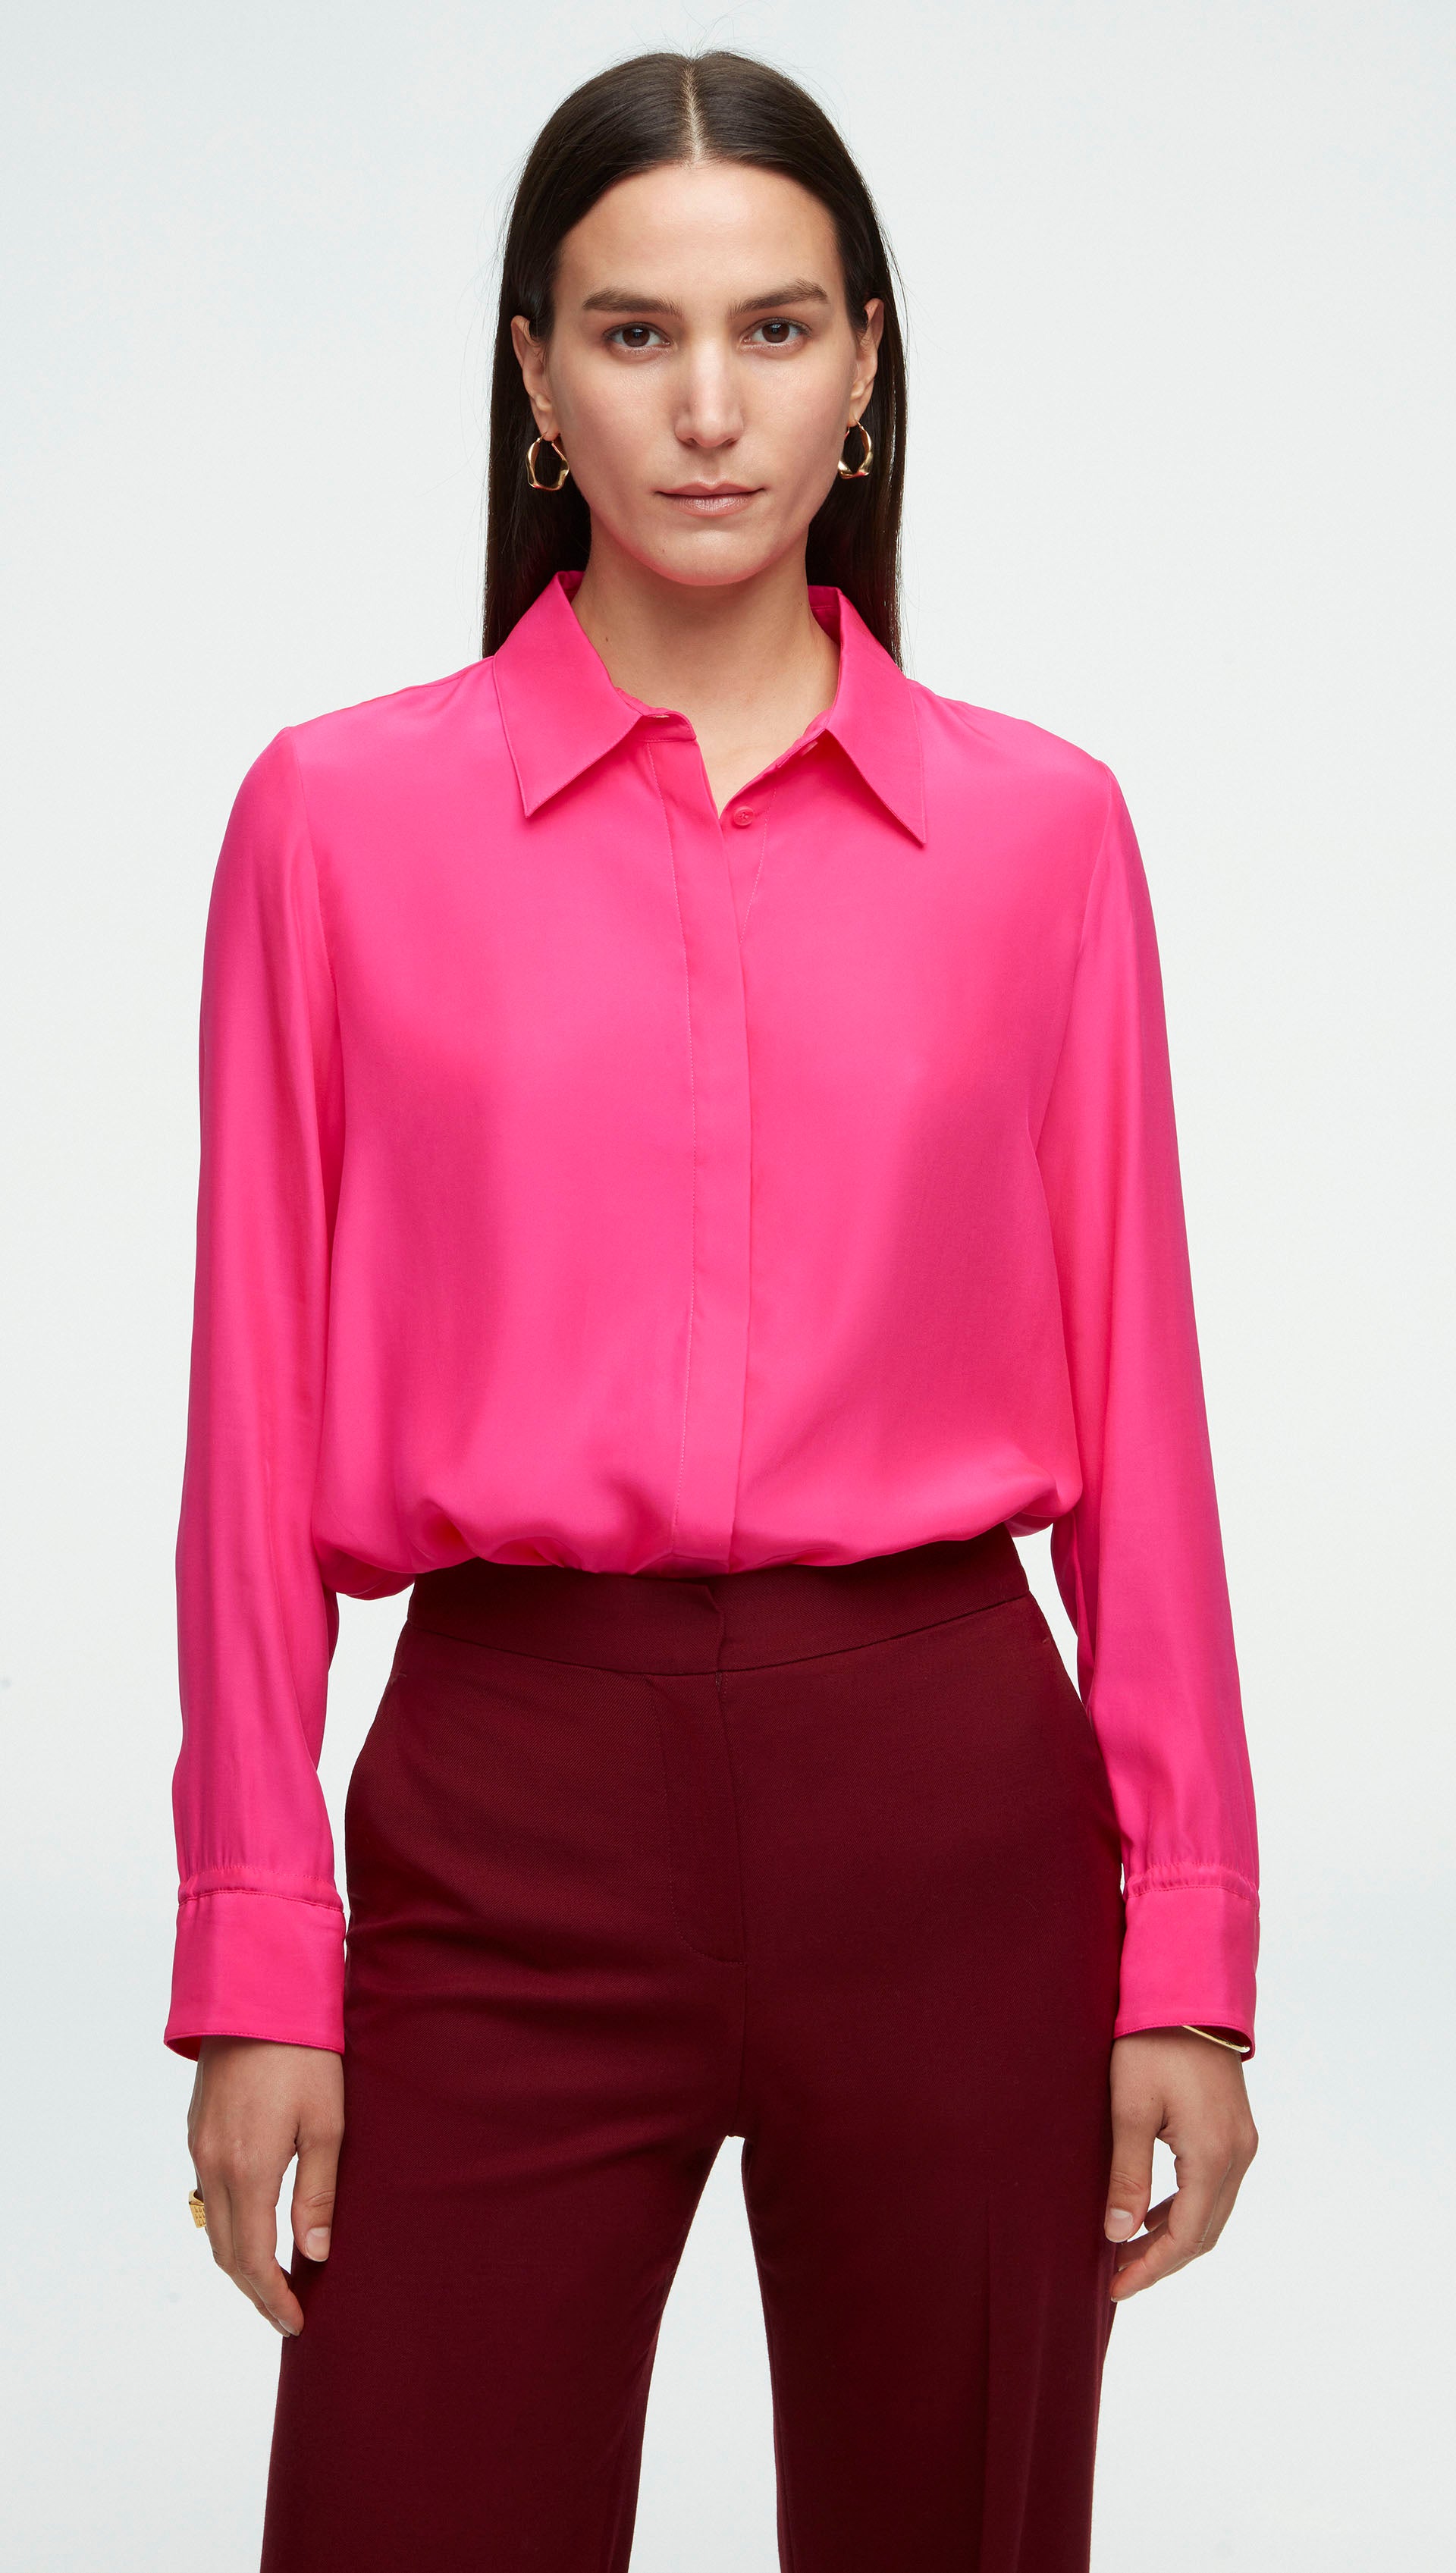 Buy Missguided Satin Bralet Shorts Overshirt 3 Piece - Pink